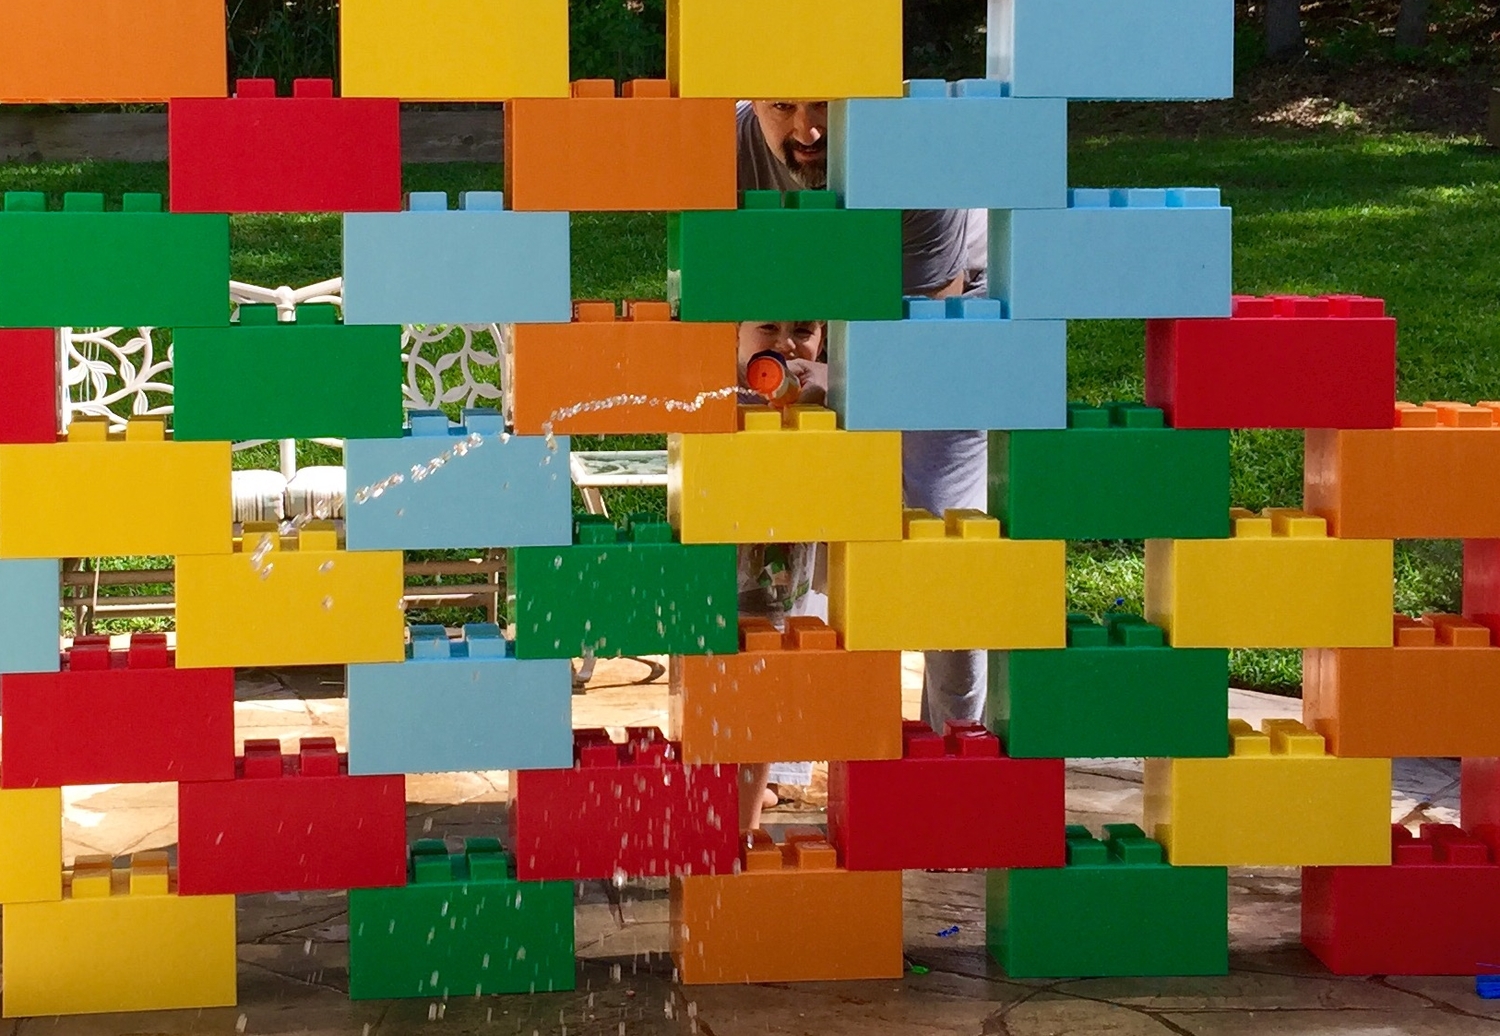 rent giant lego bricks